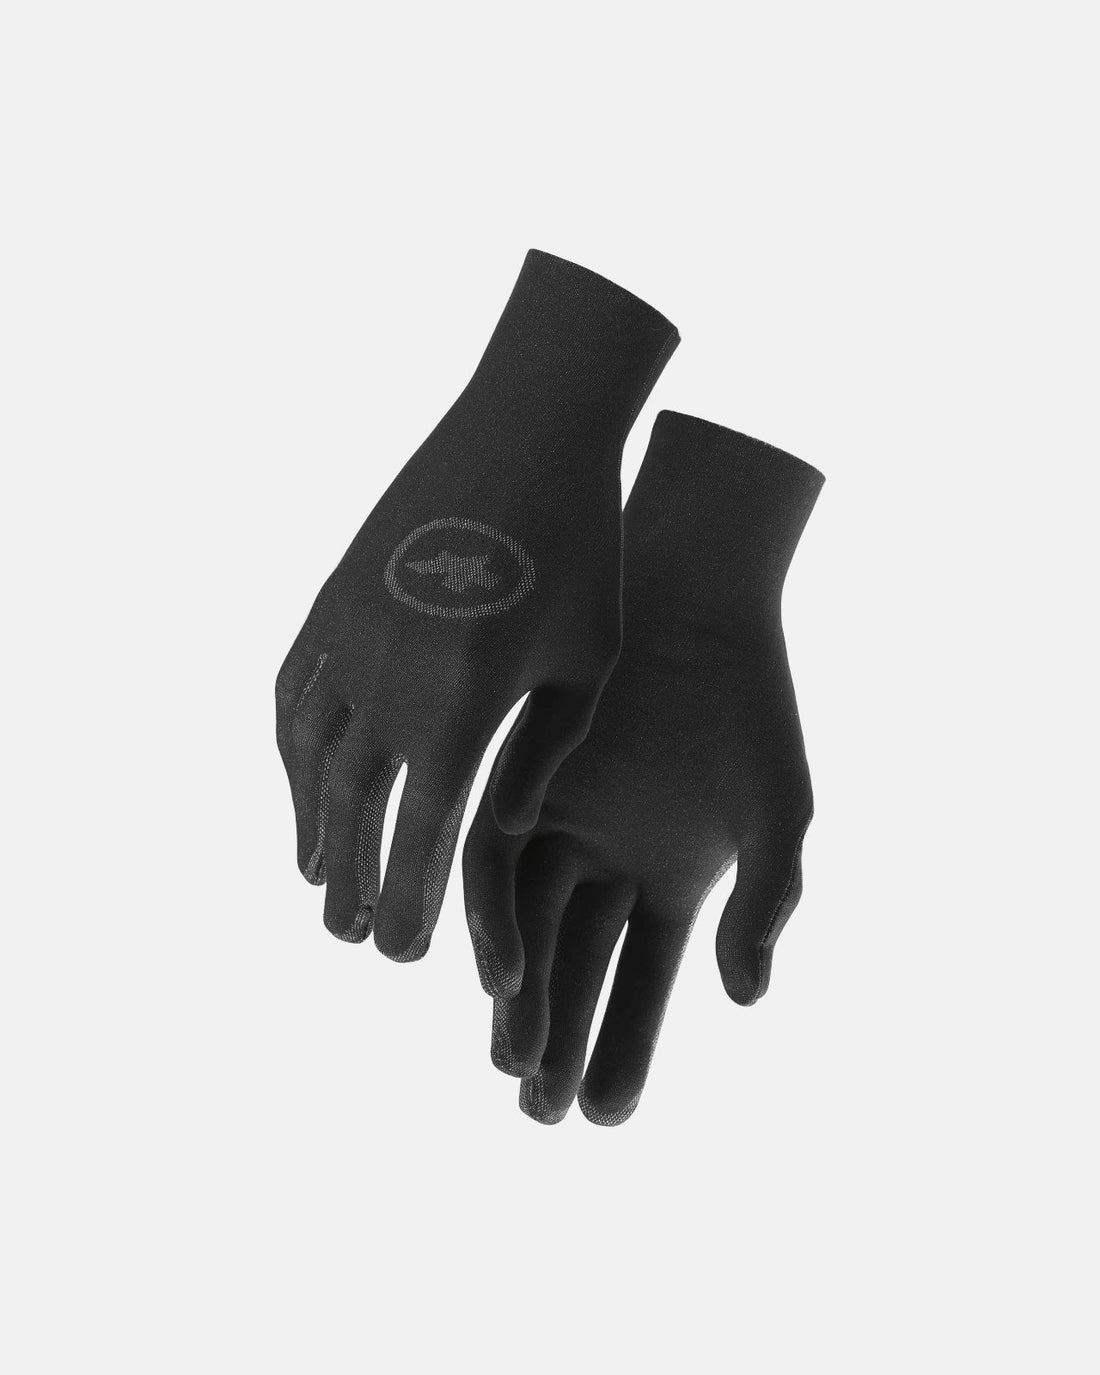 Assos Spring Fall Liner Gloves - Black | Enroute.cc